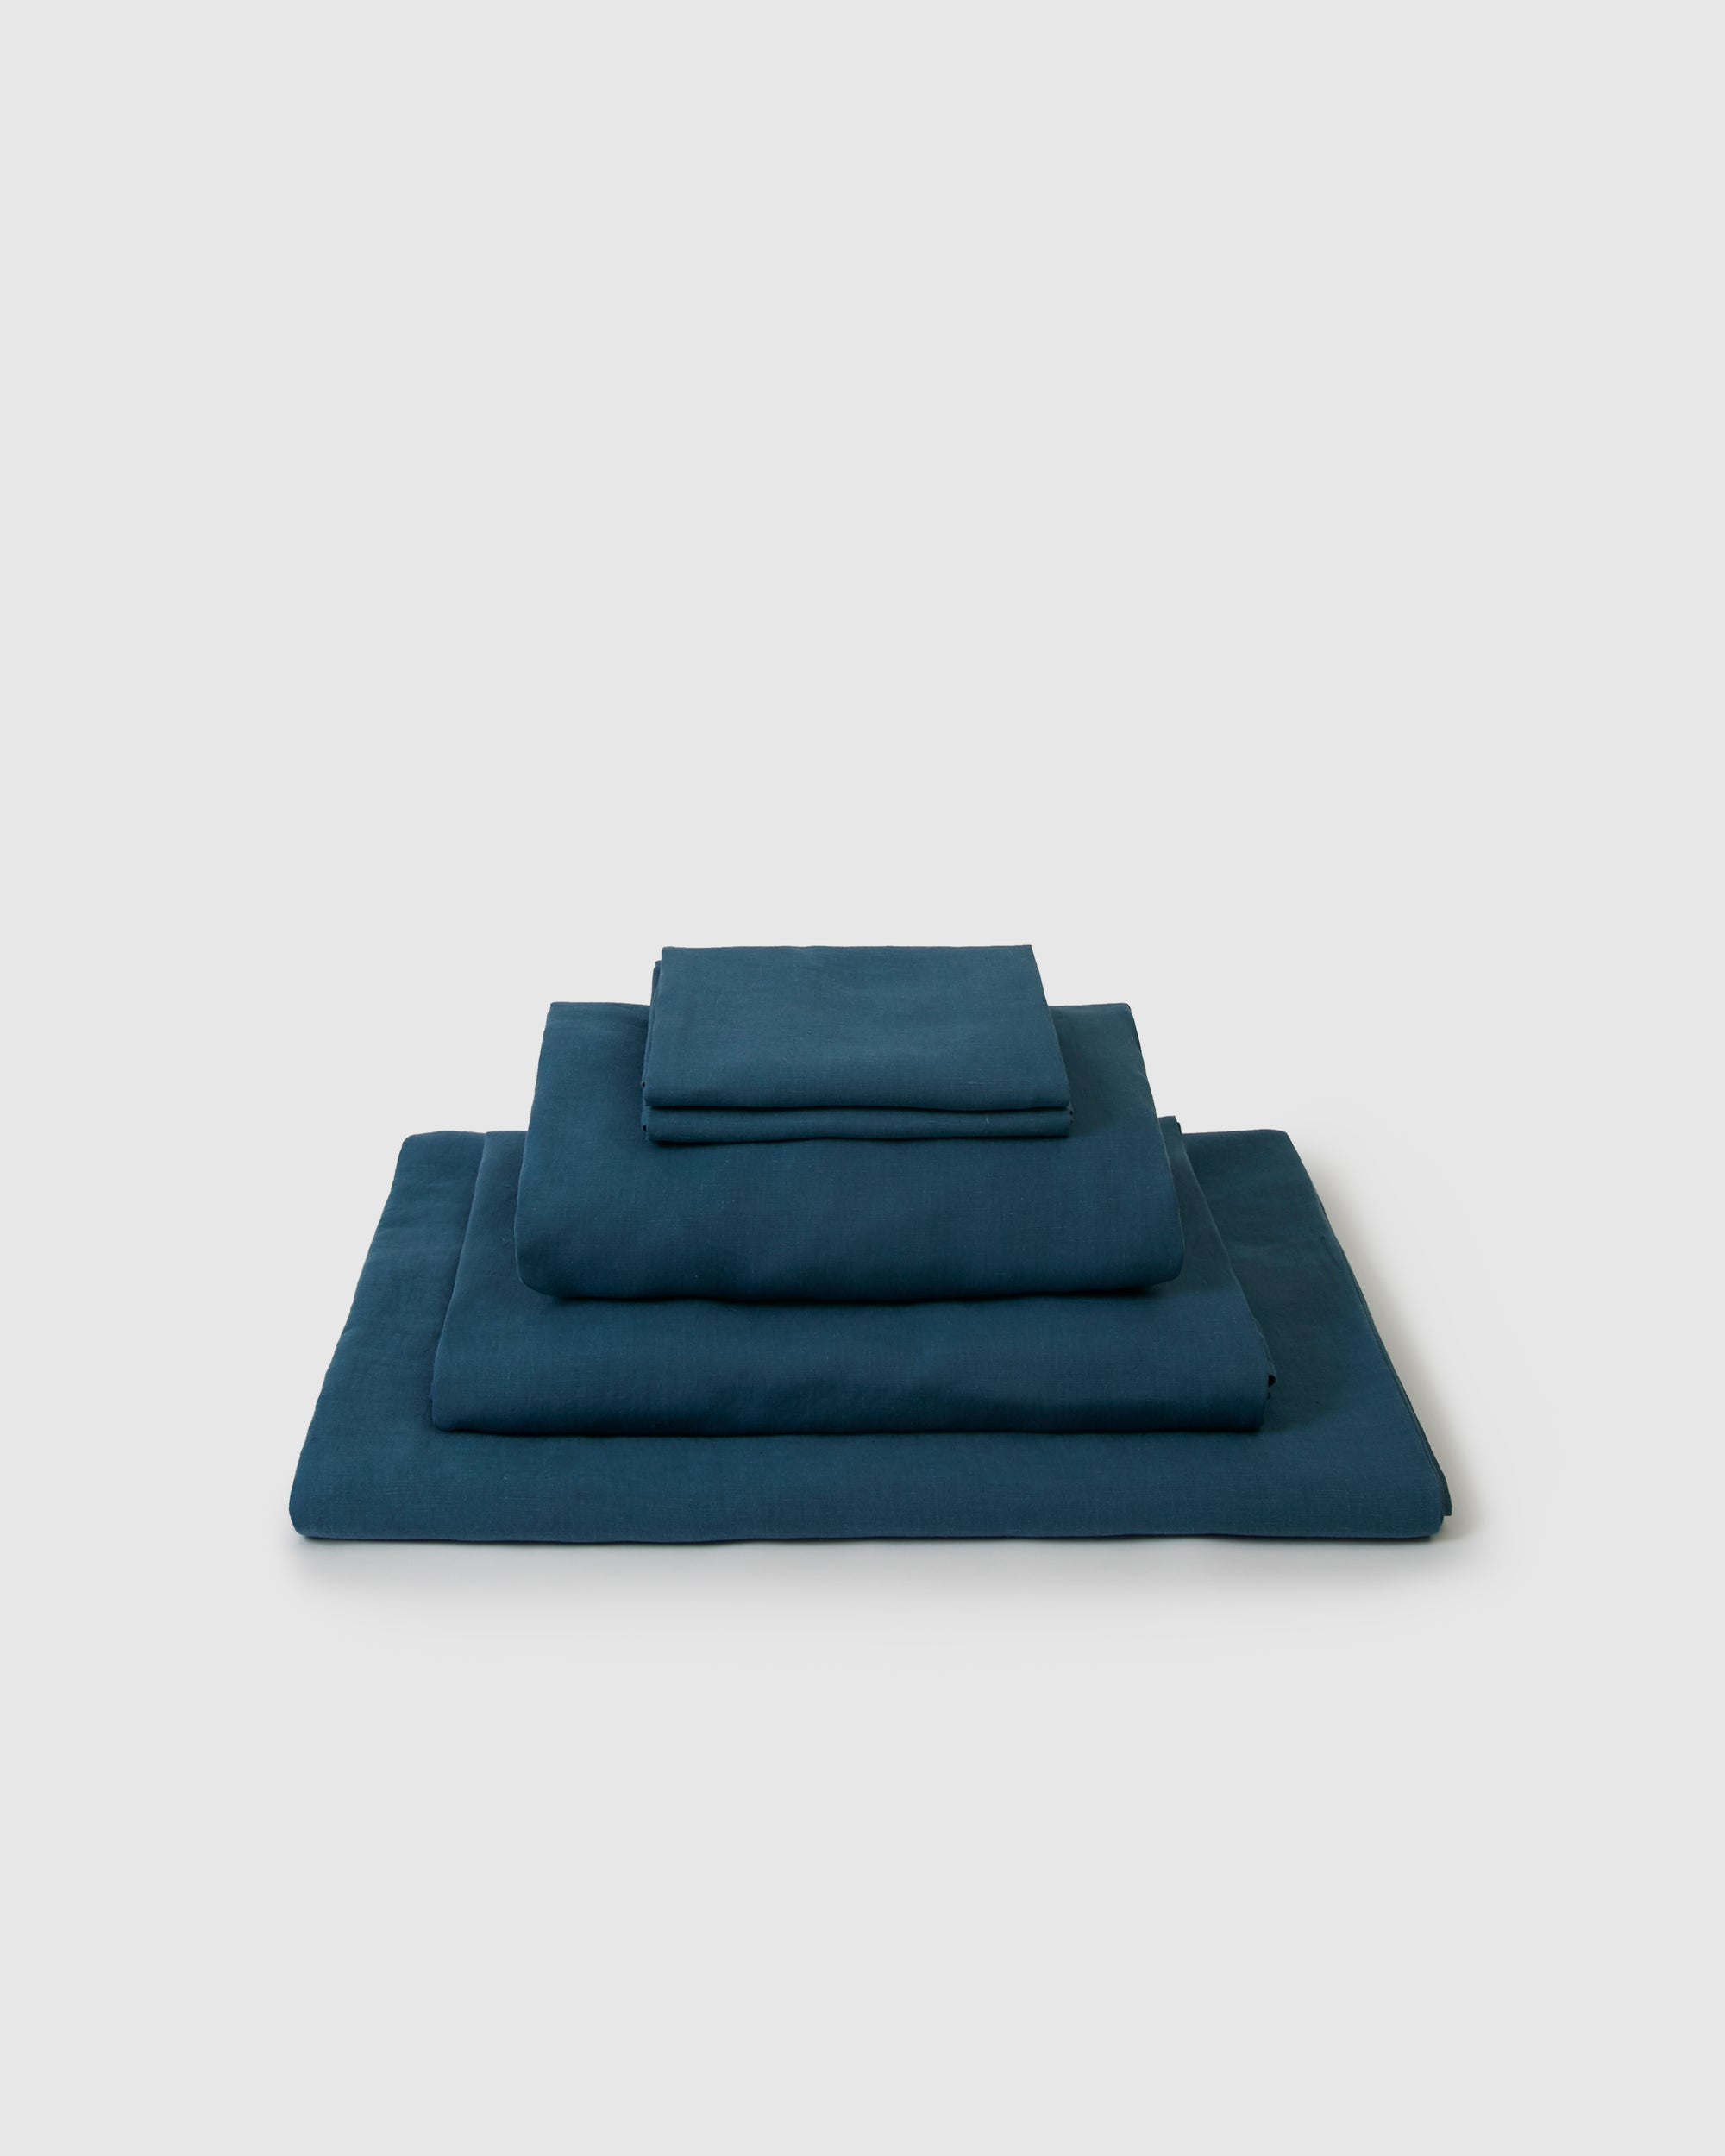 Linen sheets collection set in a dark blue adriatic indigo color